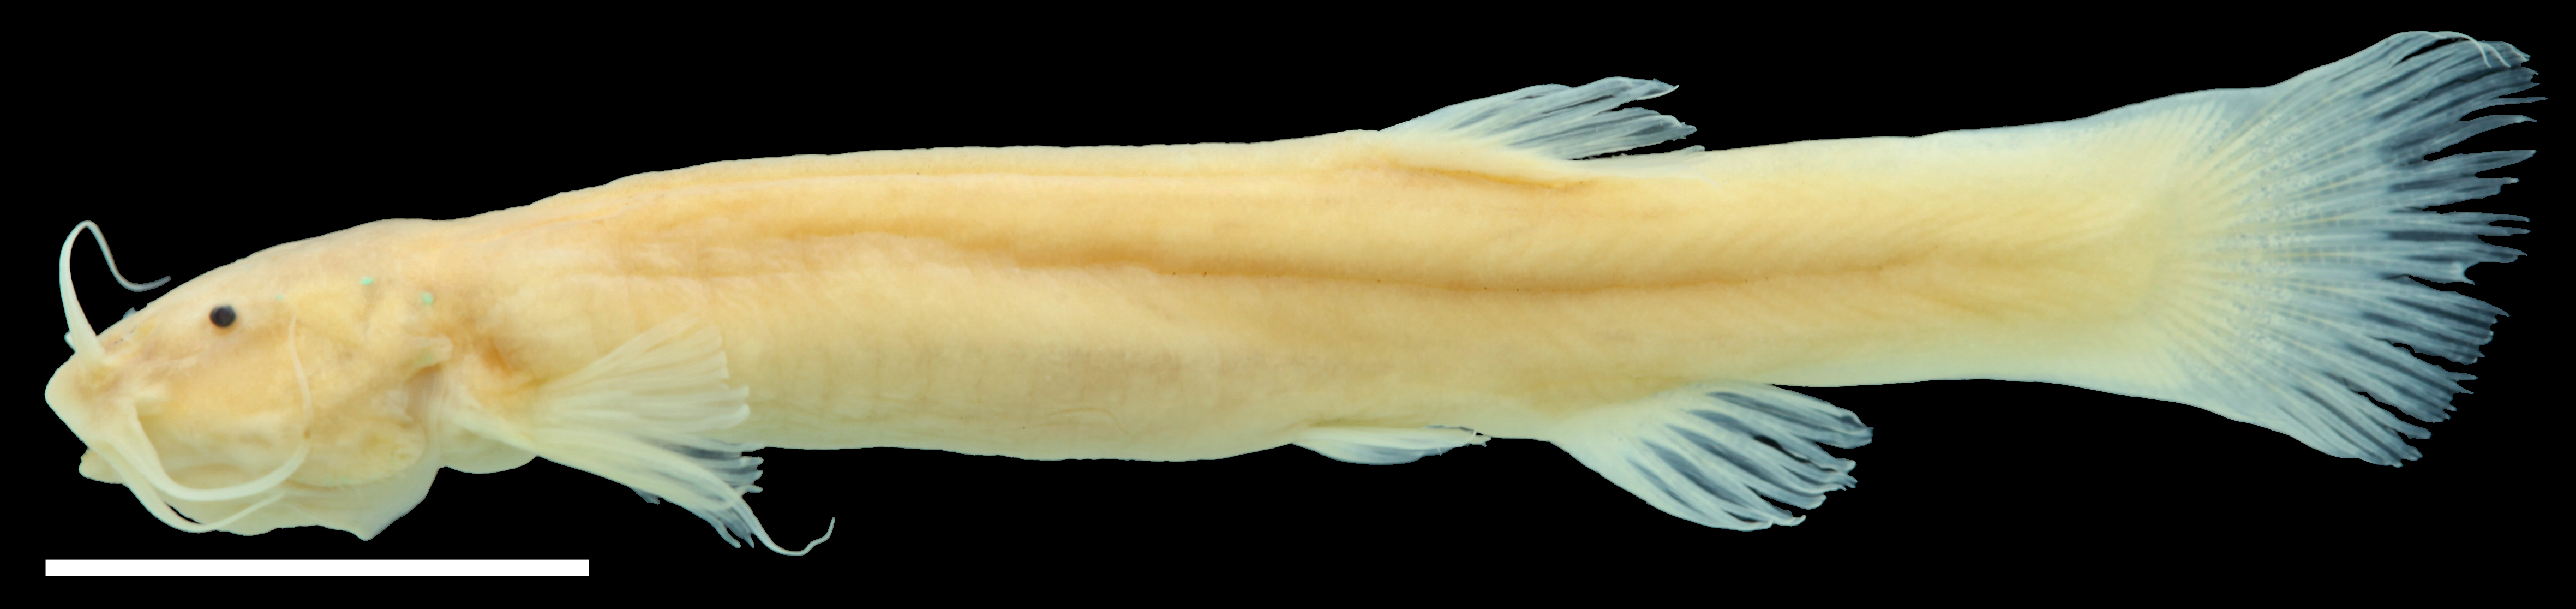 Paratype of <em>Trichomycterus sketi</em>, IAvH-P-11806_Lateral, 39.4 mm SL (scale bar = 1 cm). Photograph by C. DoNascimiento